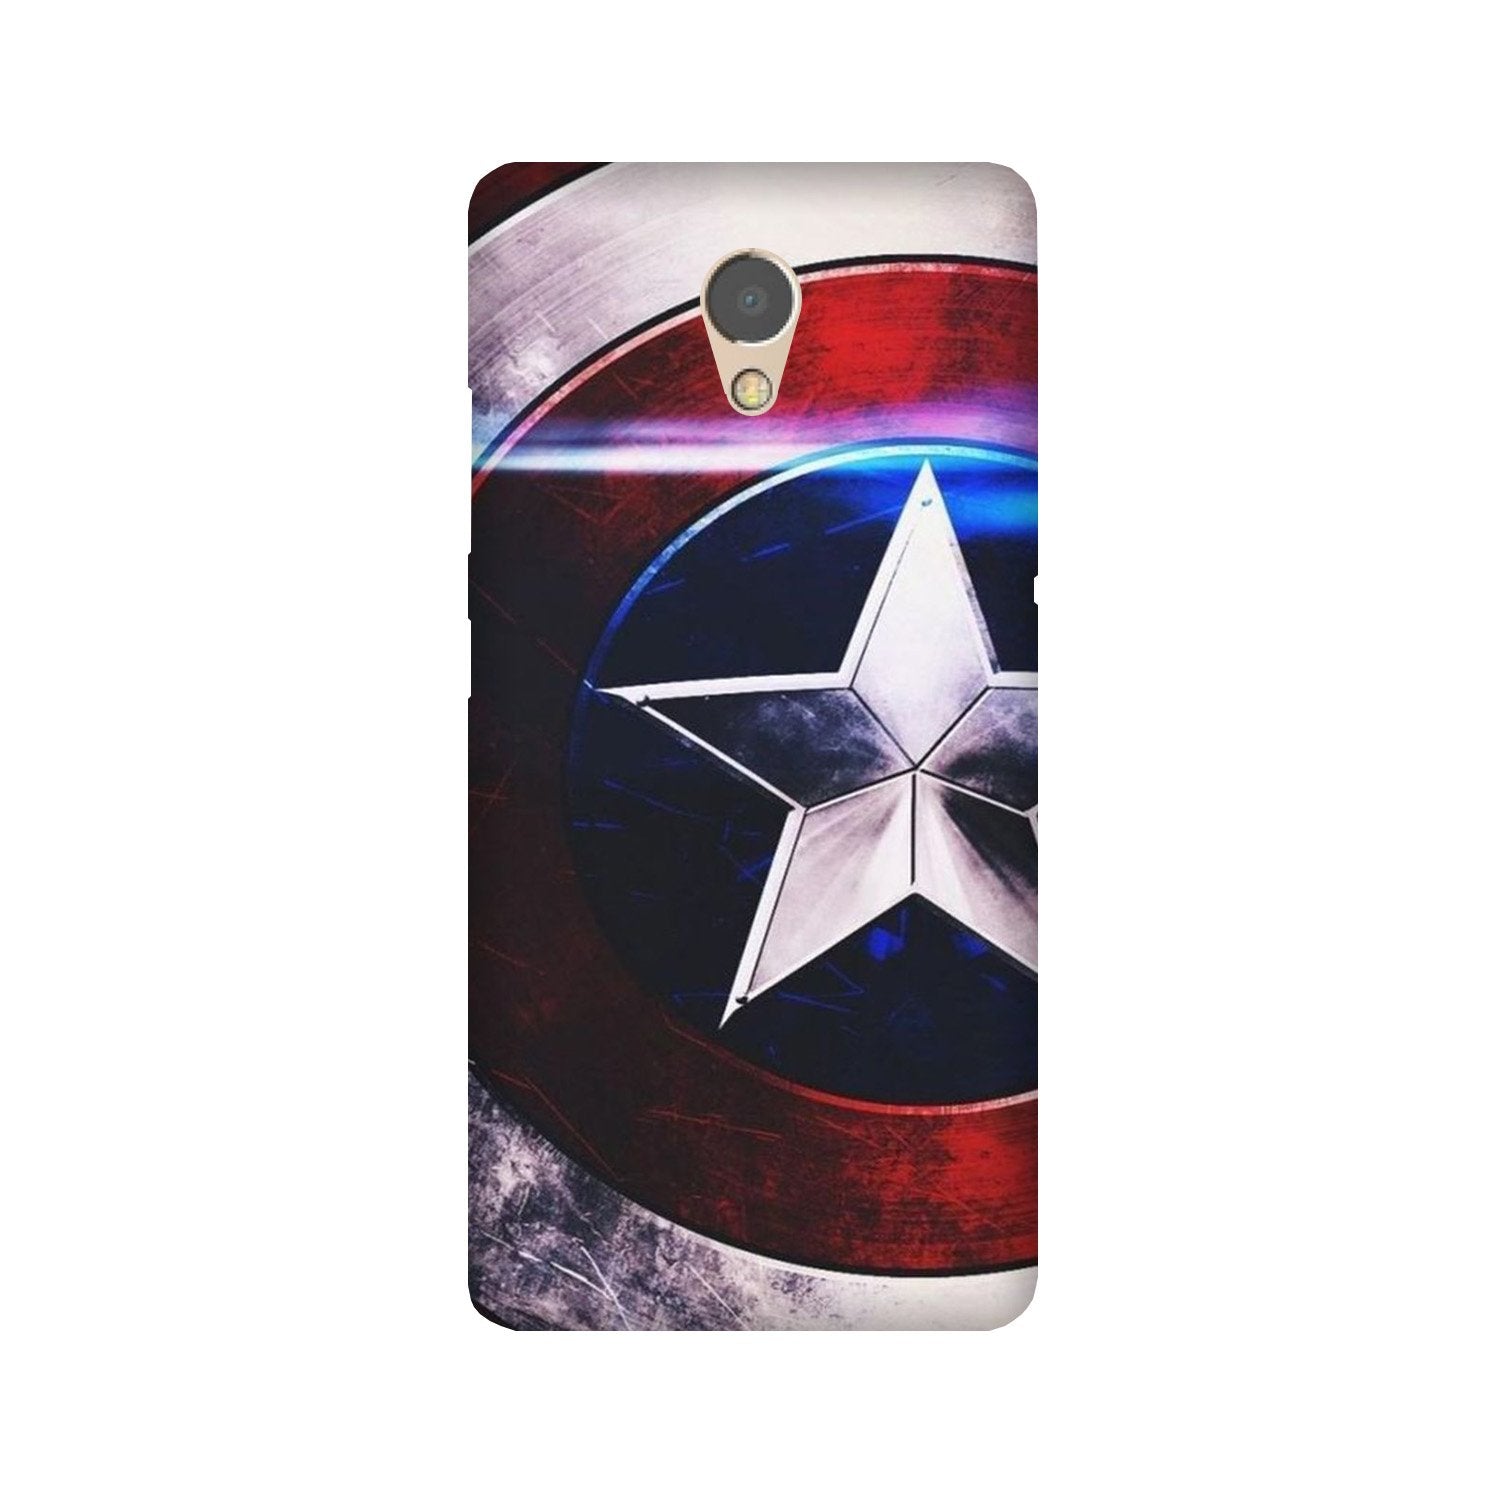 Captain America Shield Case for Lenovo P2 (Design No. 250)